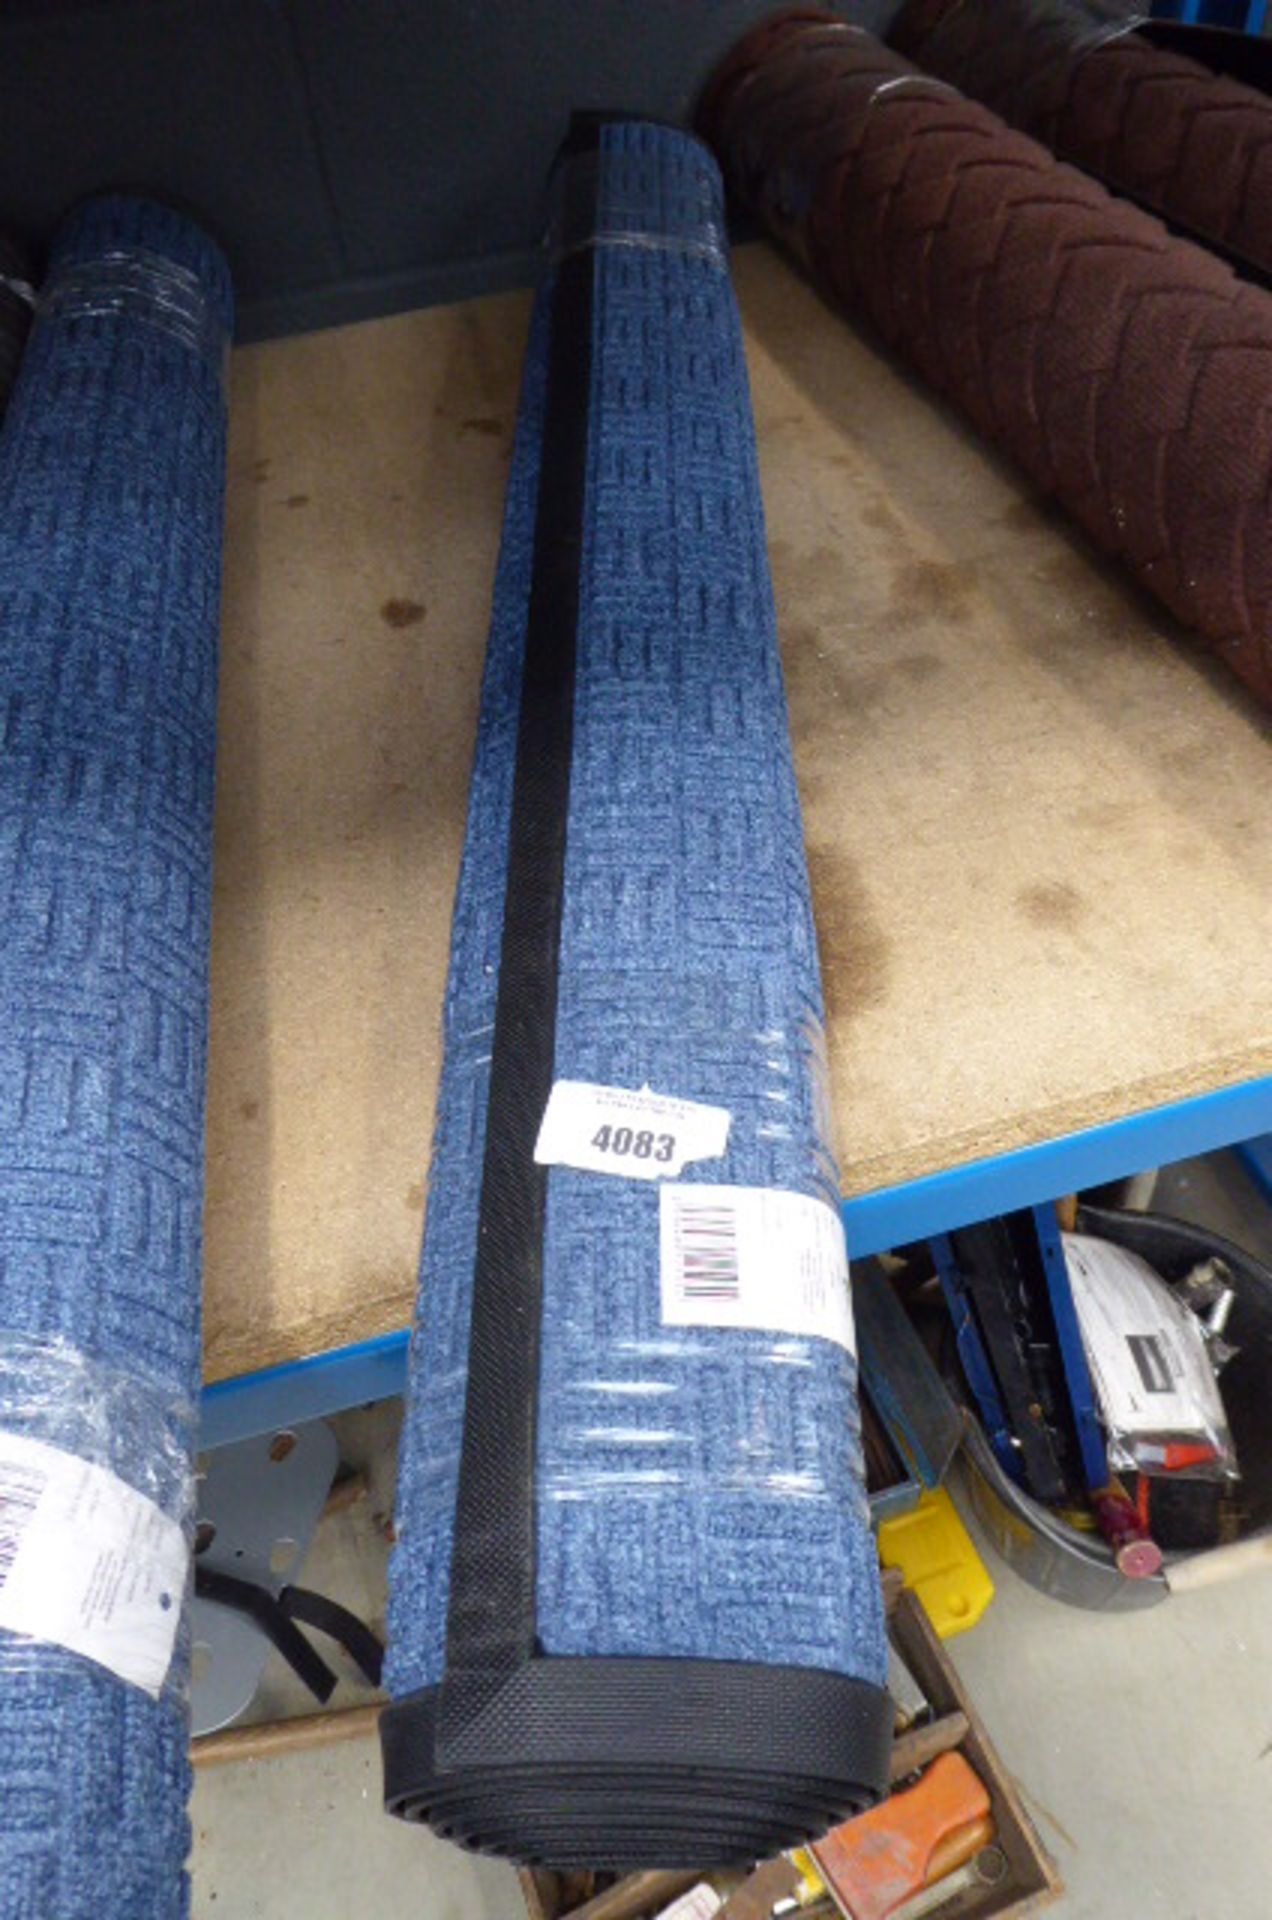 Blue rubber backed mat